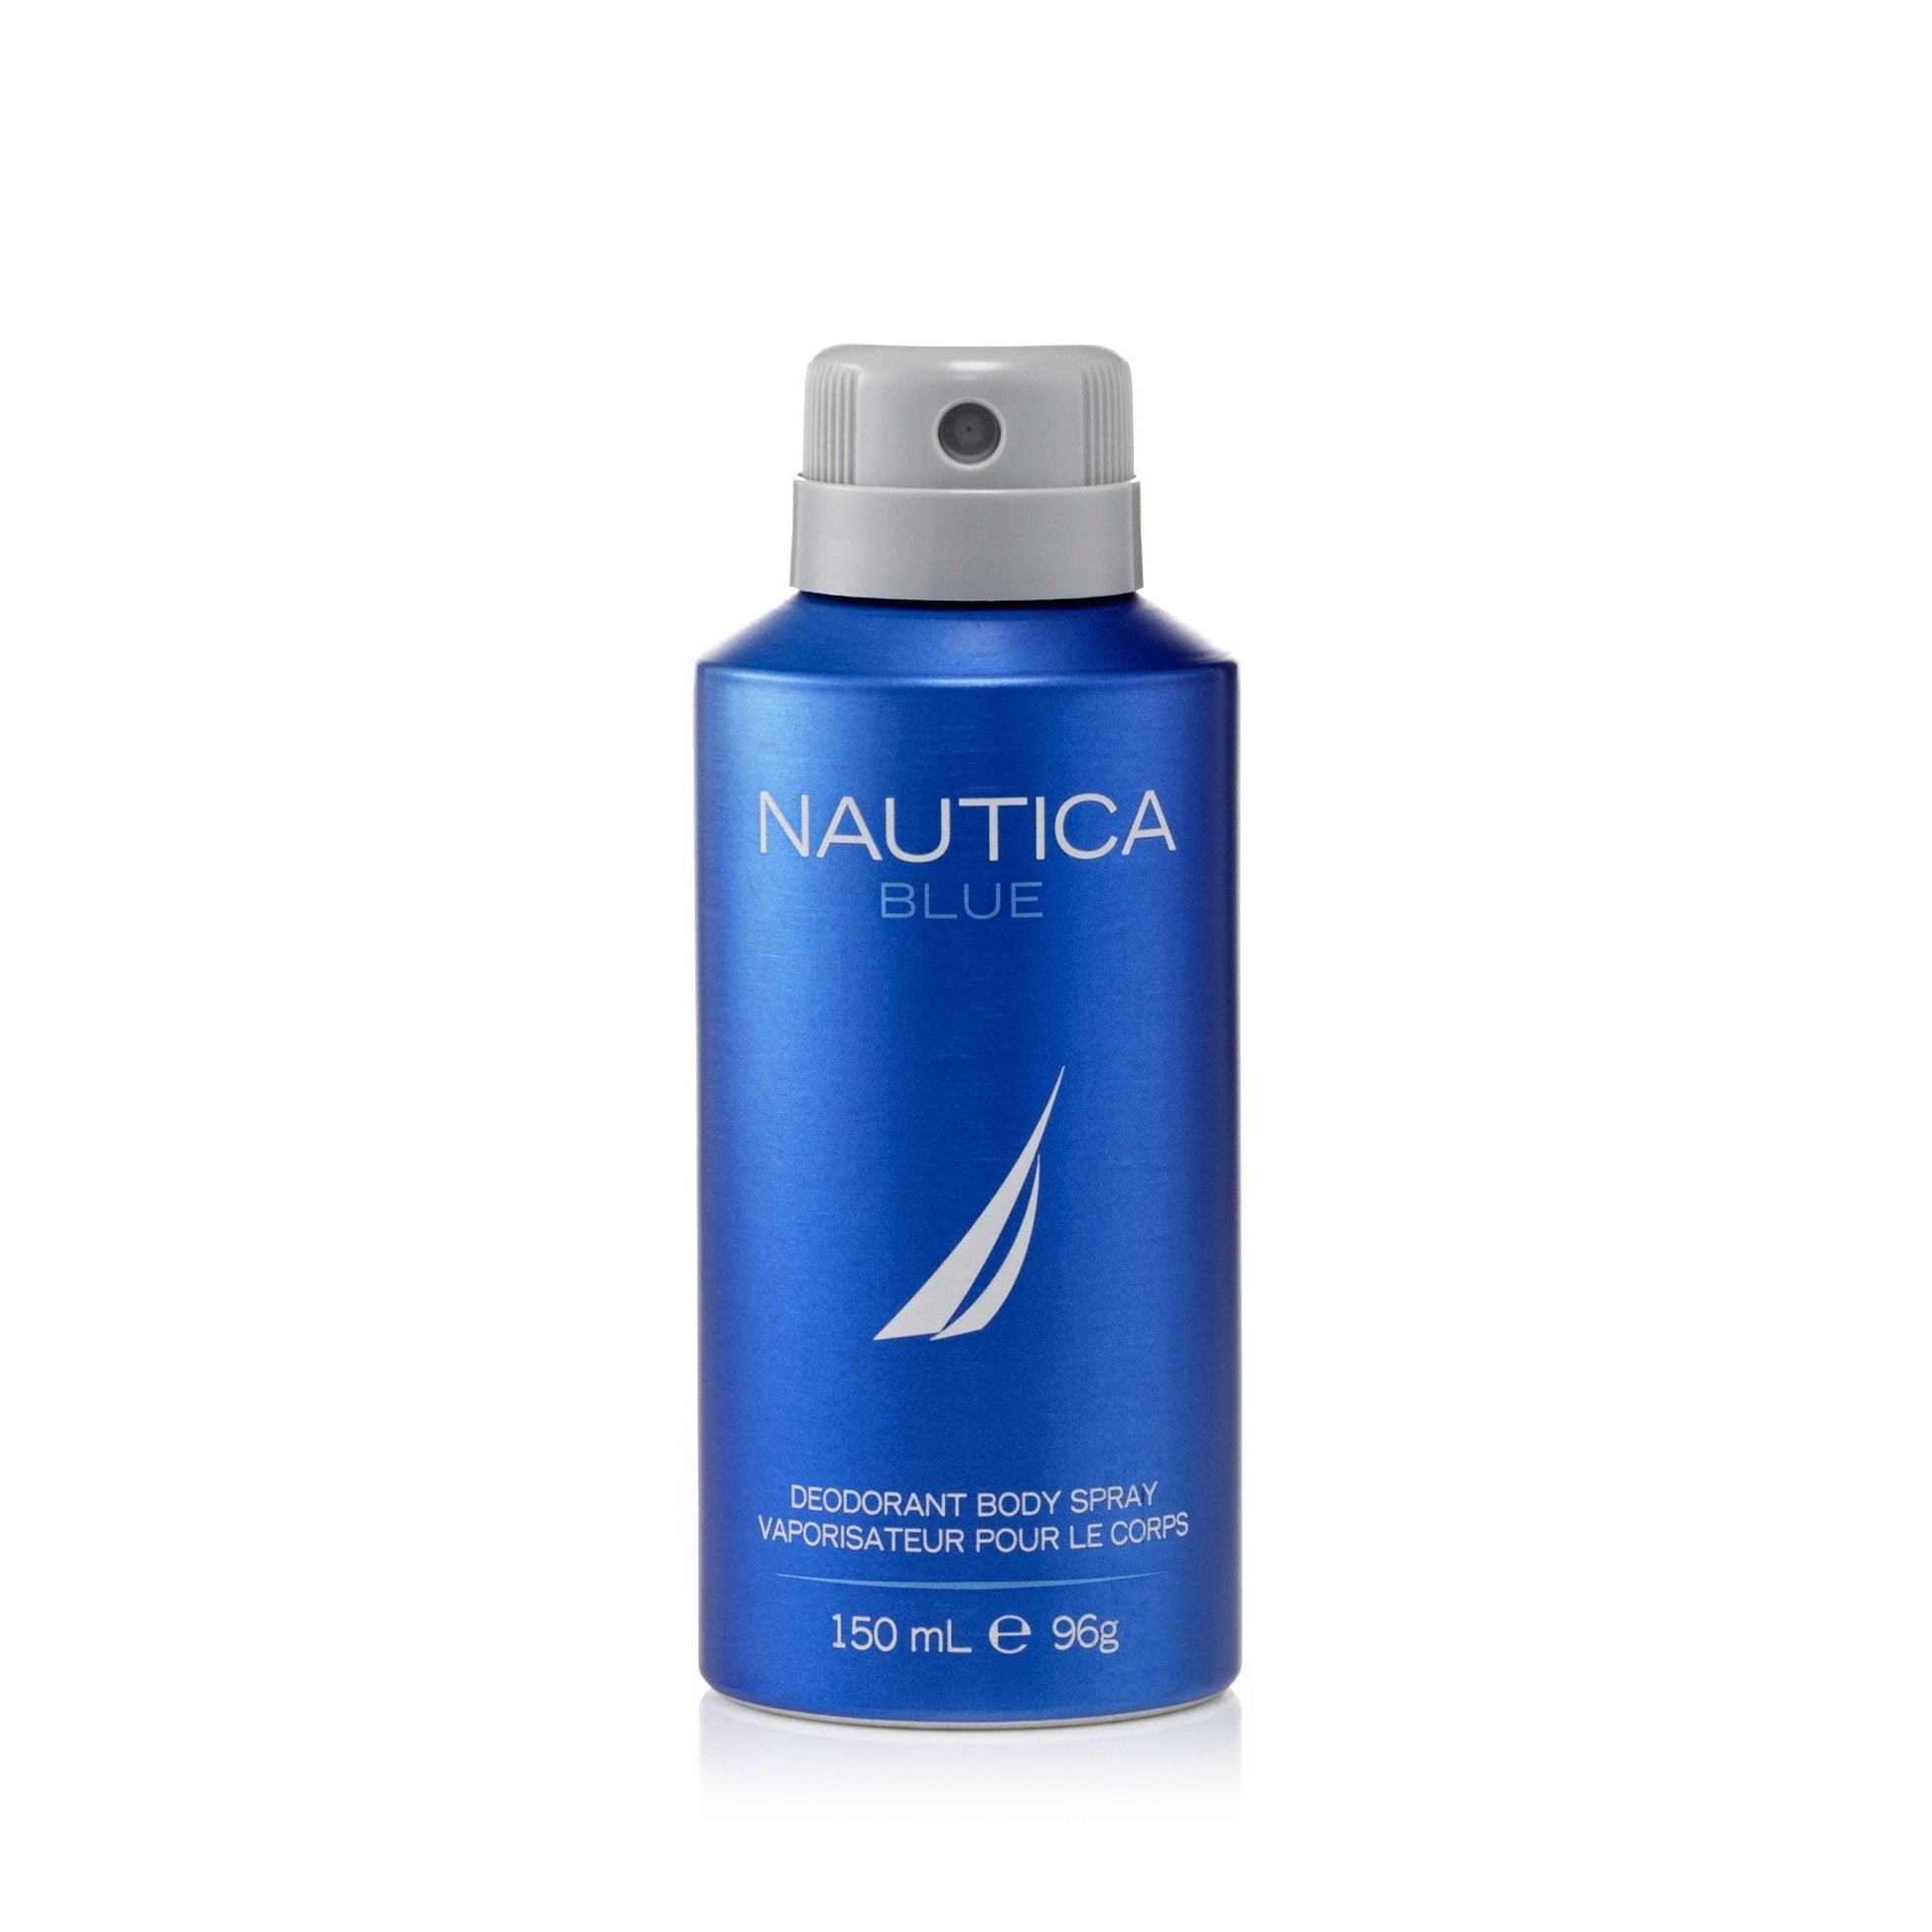 Nautica Blue Deodorant Body Spray for Men by Nautica, Product image 1